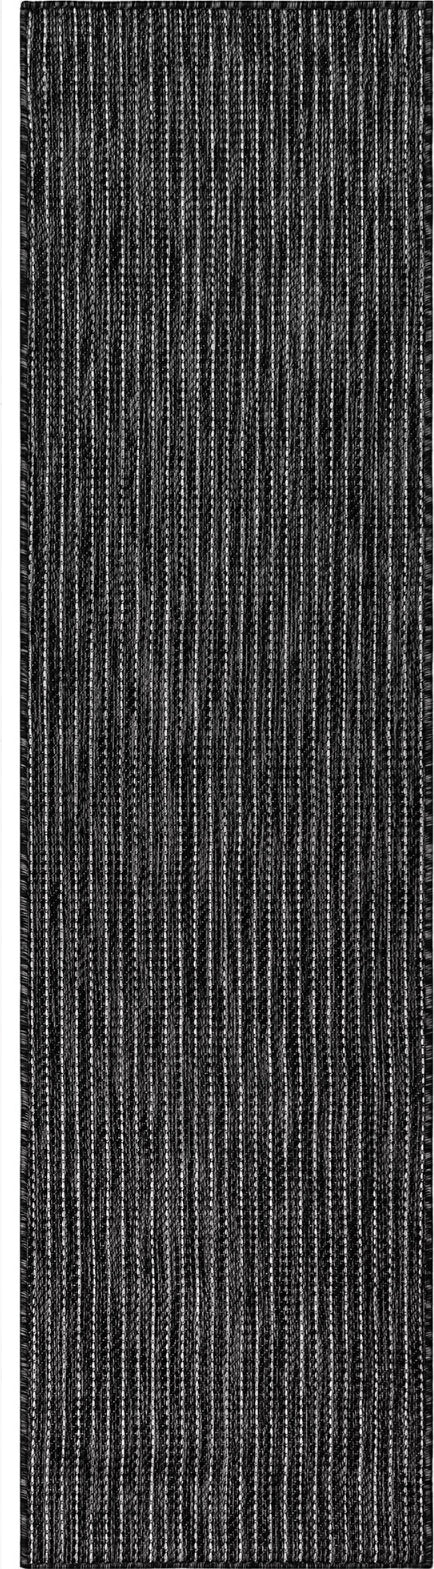 Trans Ocean Carmel 8422/48 Texture Stripe Black Area Rug by Liora 